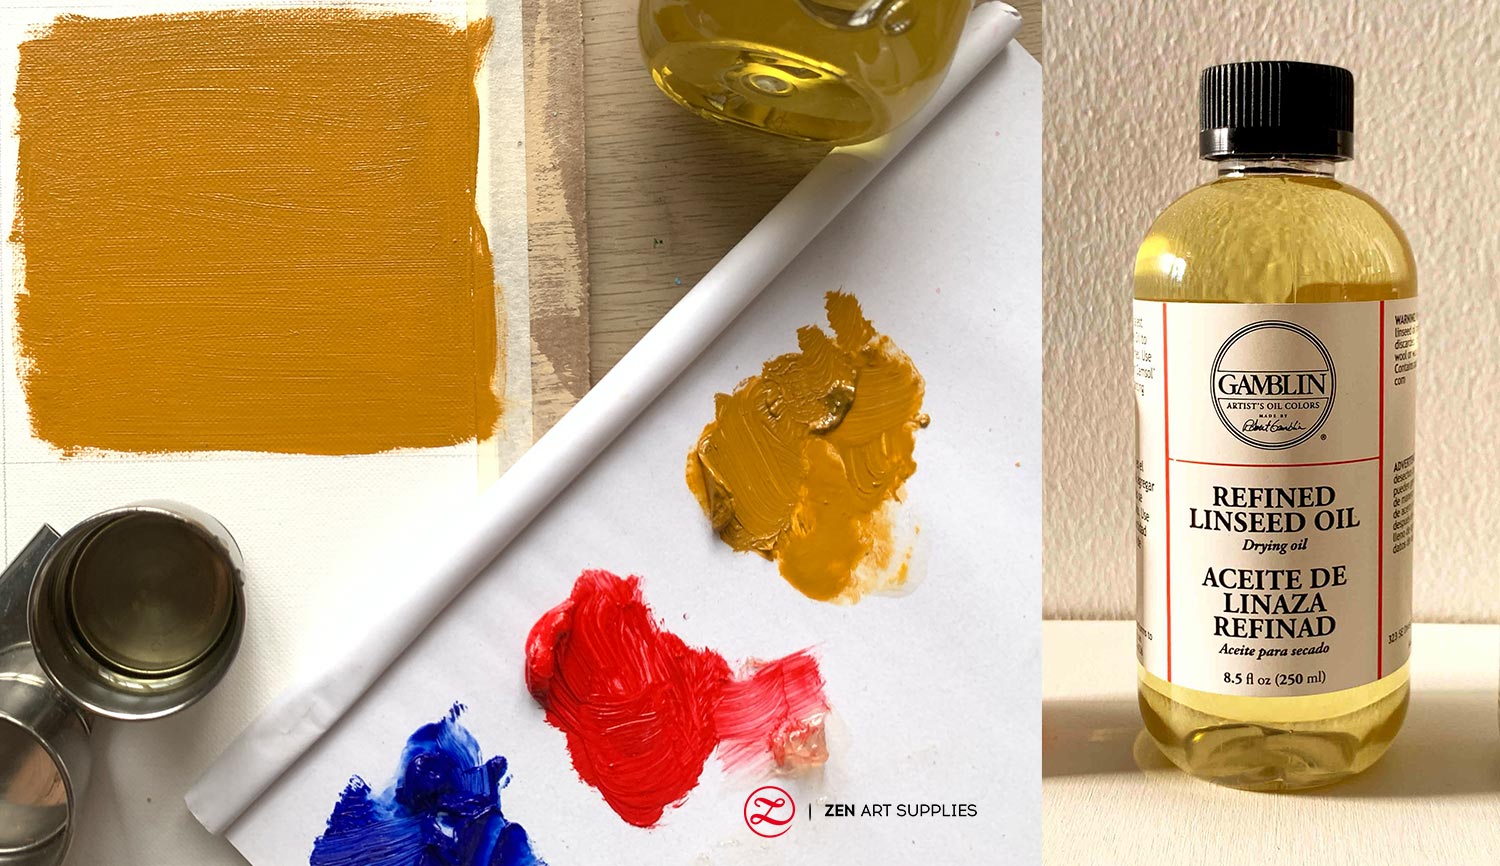 Fluid Oil Paint Mediums - Oil Painting Mediums - Mediums & Grounds